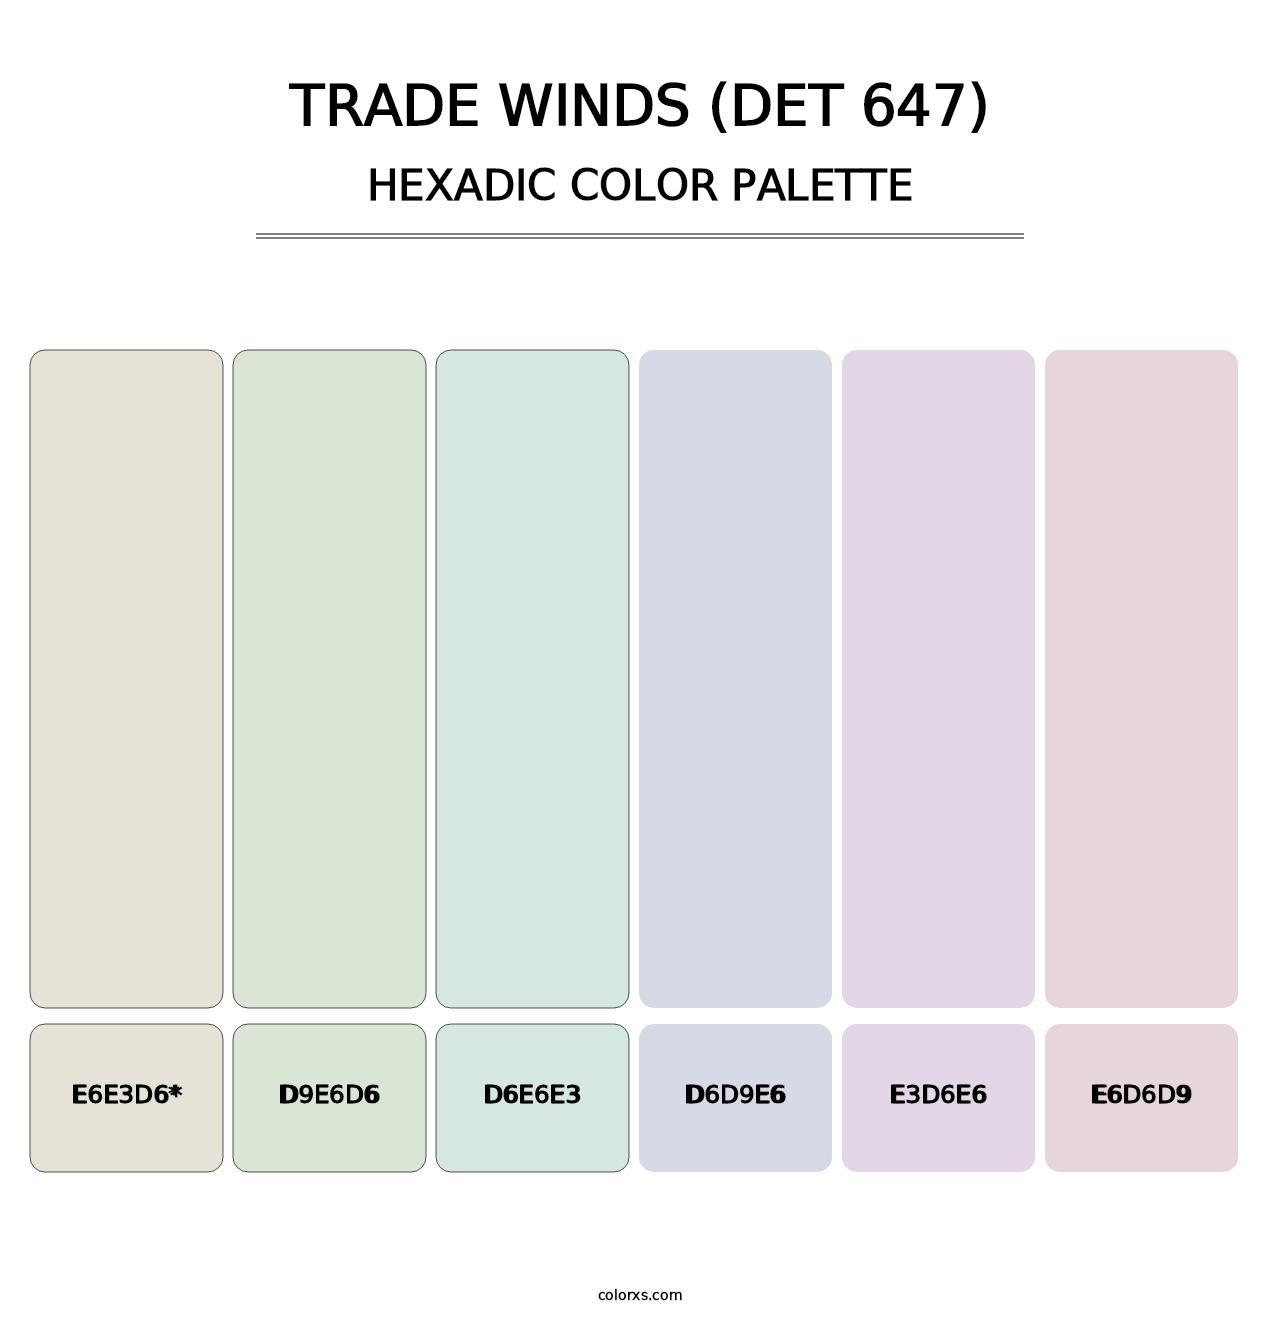 Trade Winds (DET 647) - Hexadic Color Palette